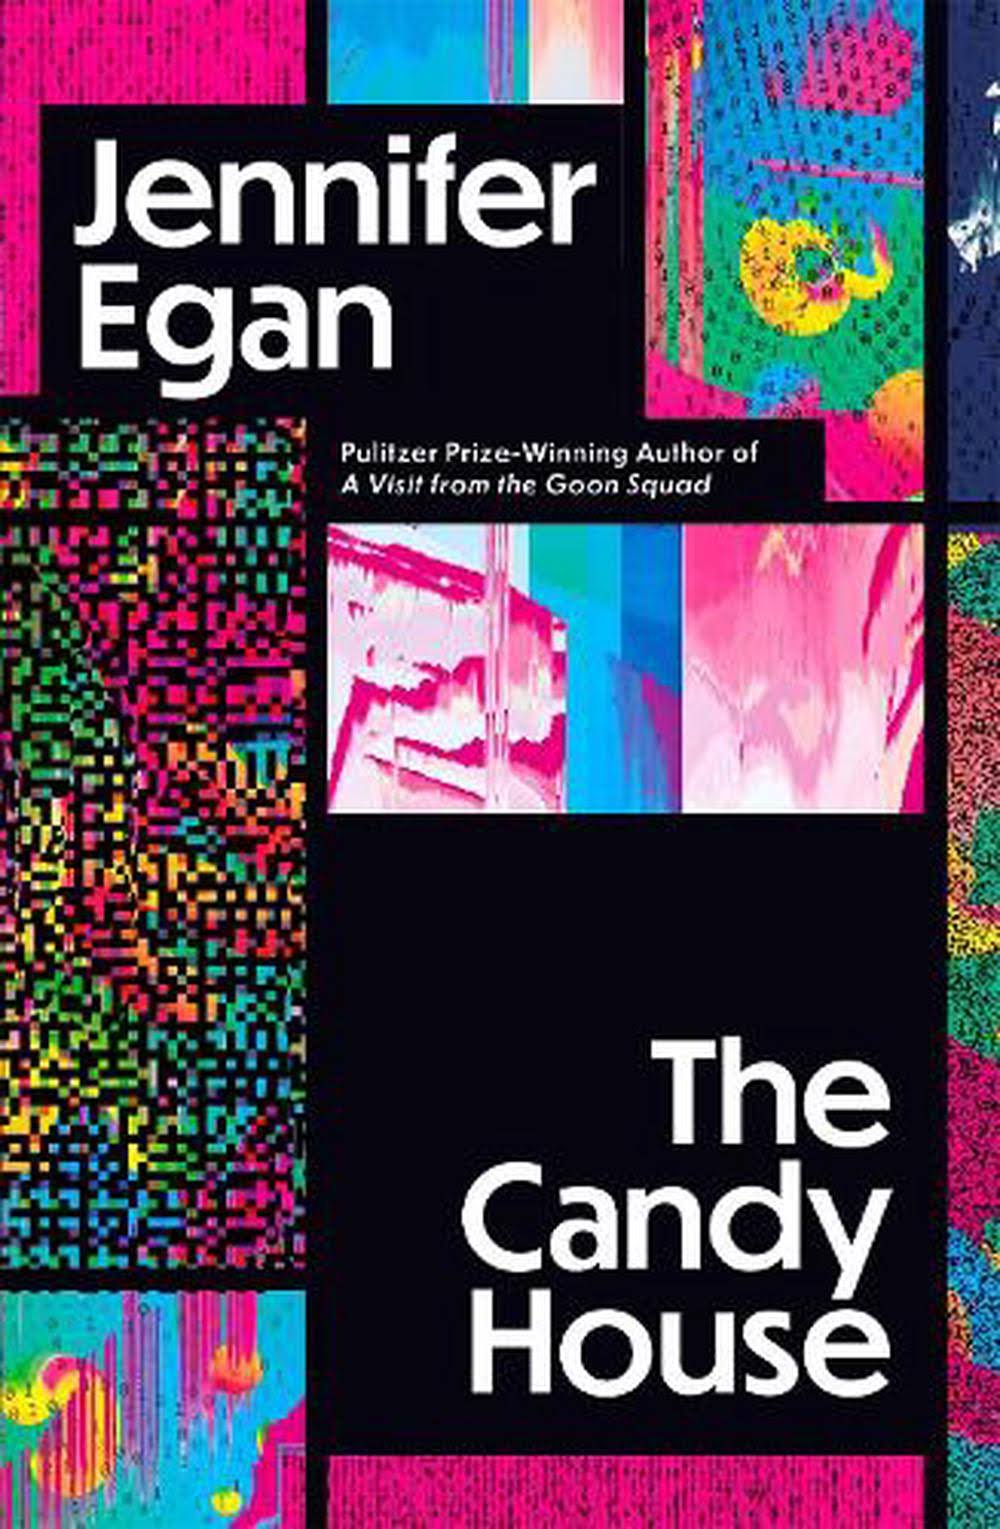 The Candy House by Jennifer Egan